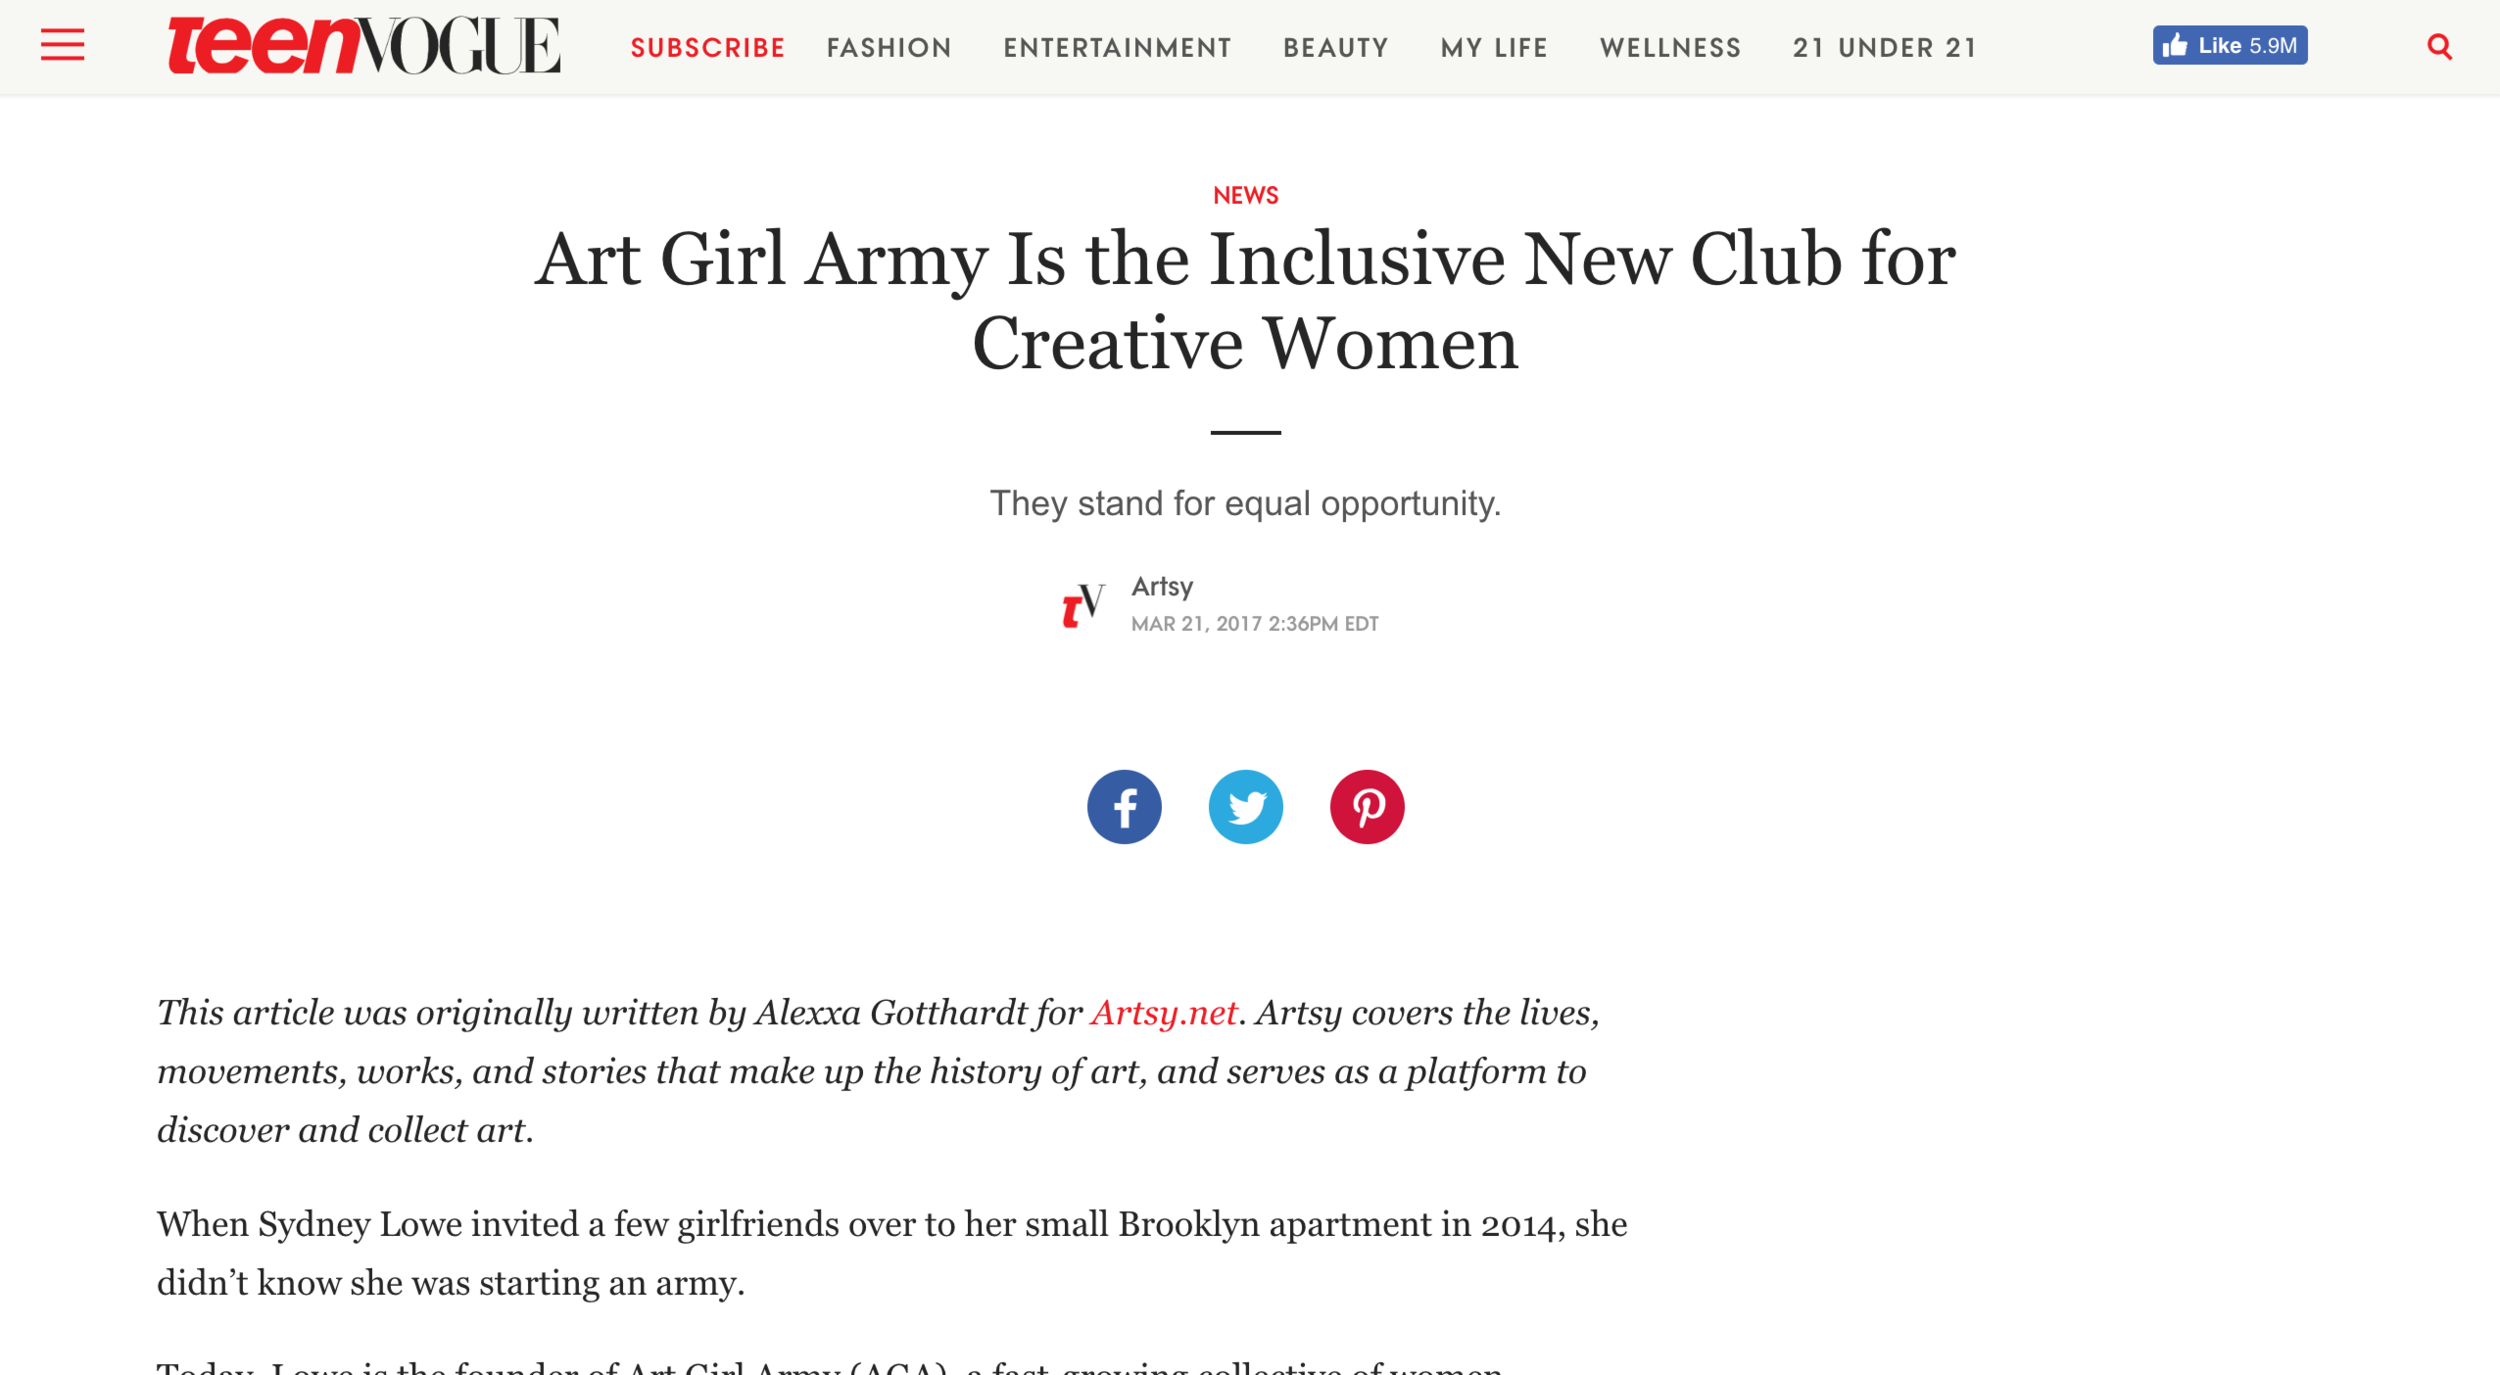 Art Girl Army Teen Vogue Article Screen Shot March 2017 copy.png